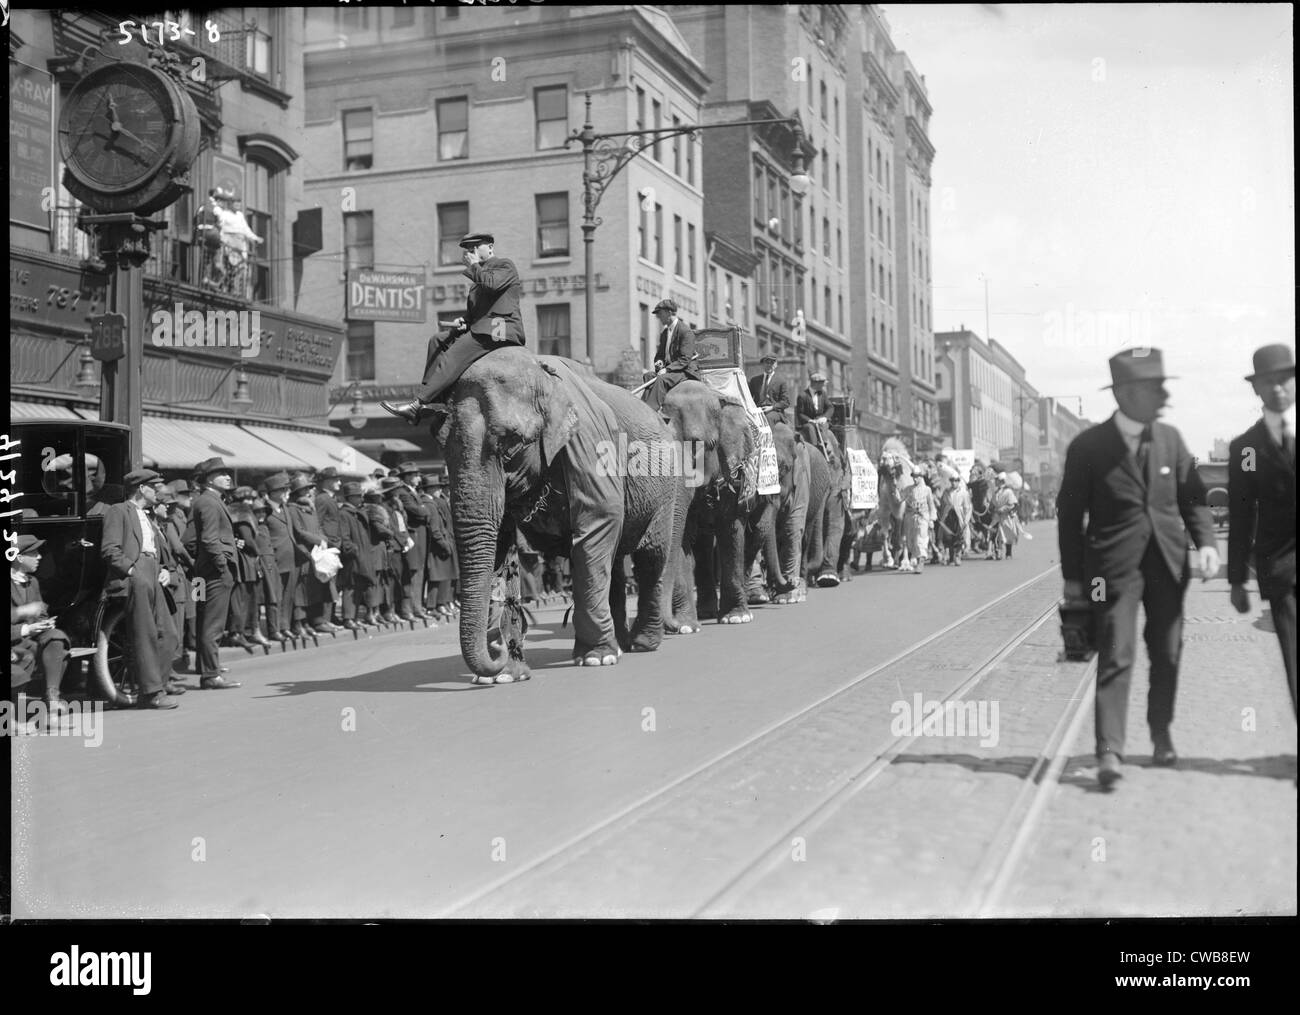 Overalls "Circus Parade" . Riding elephants in Coney Island, New York City, 1900-1910 Stock Photo